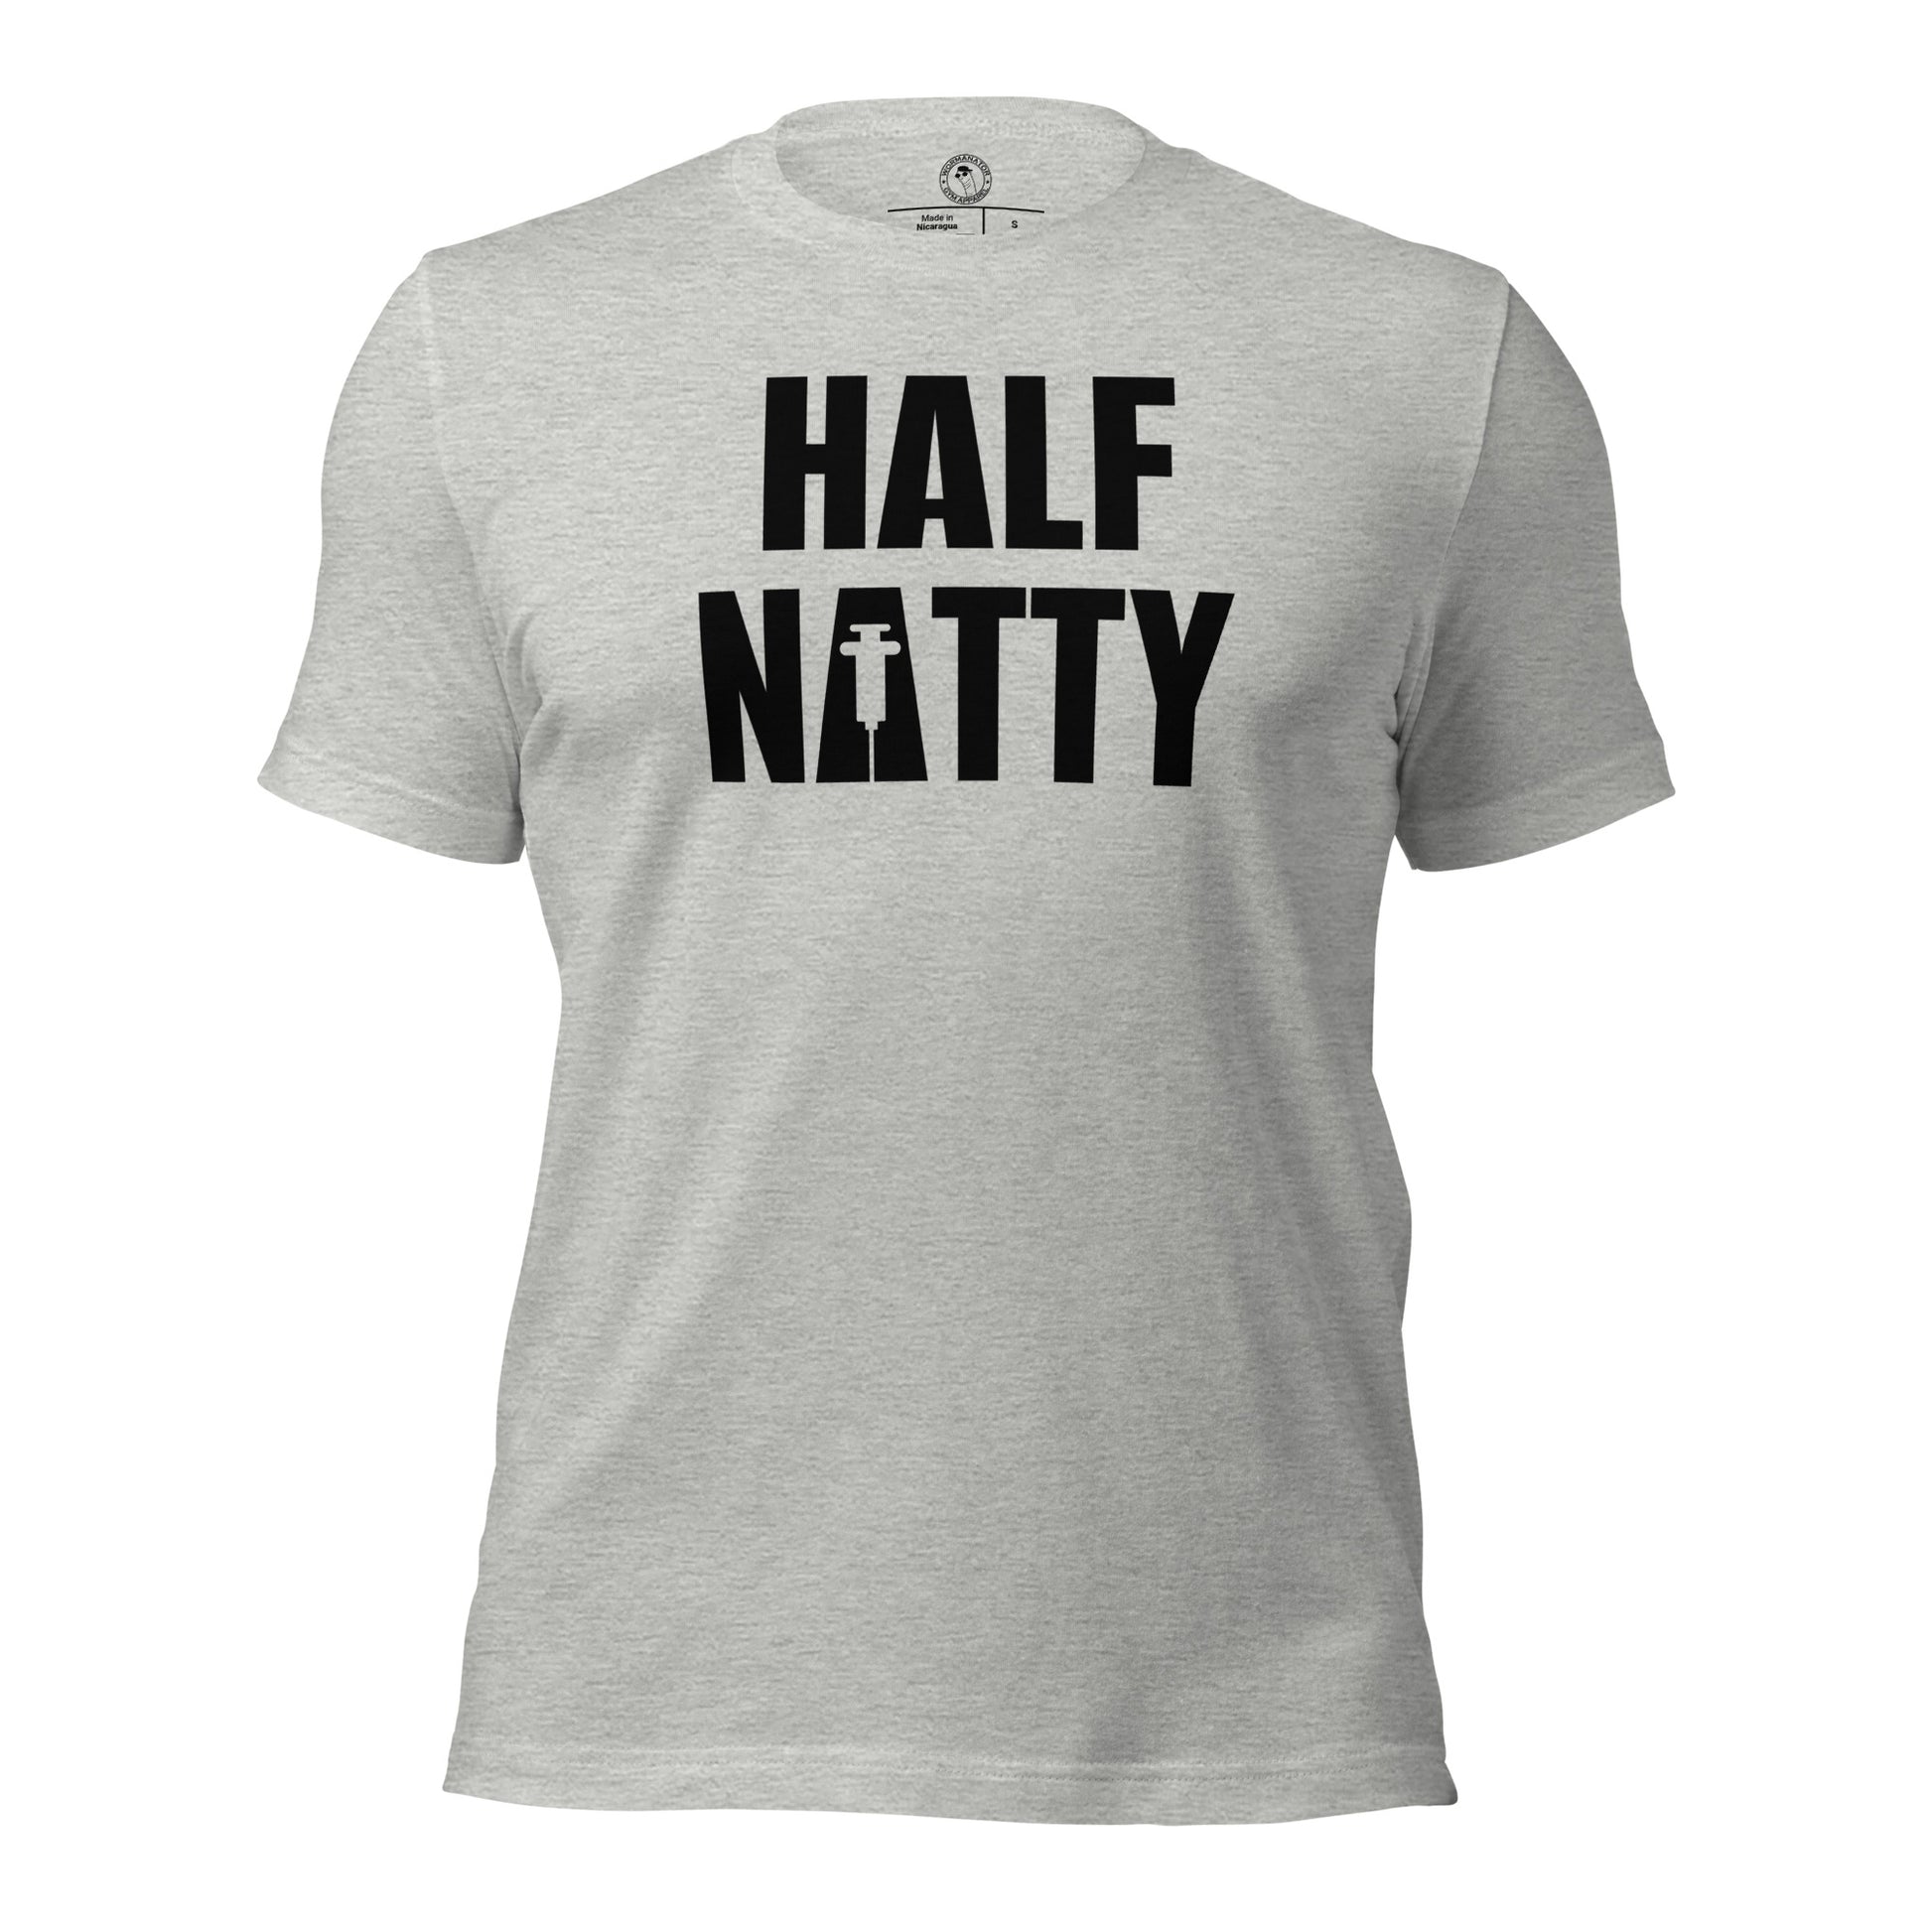 Half Natty T-Shirt in Athletic Heather